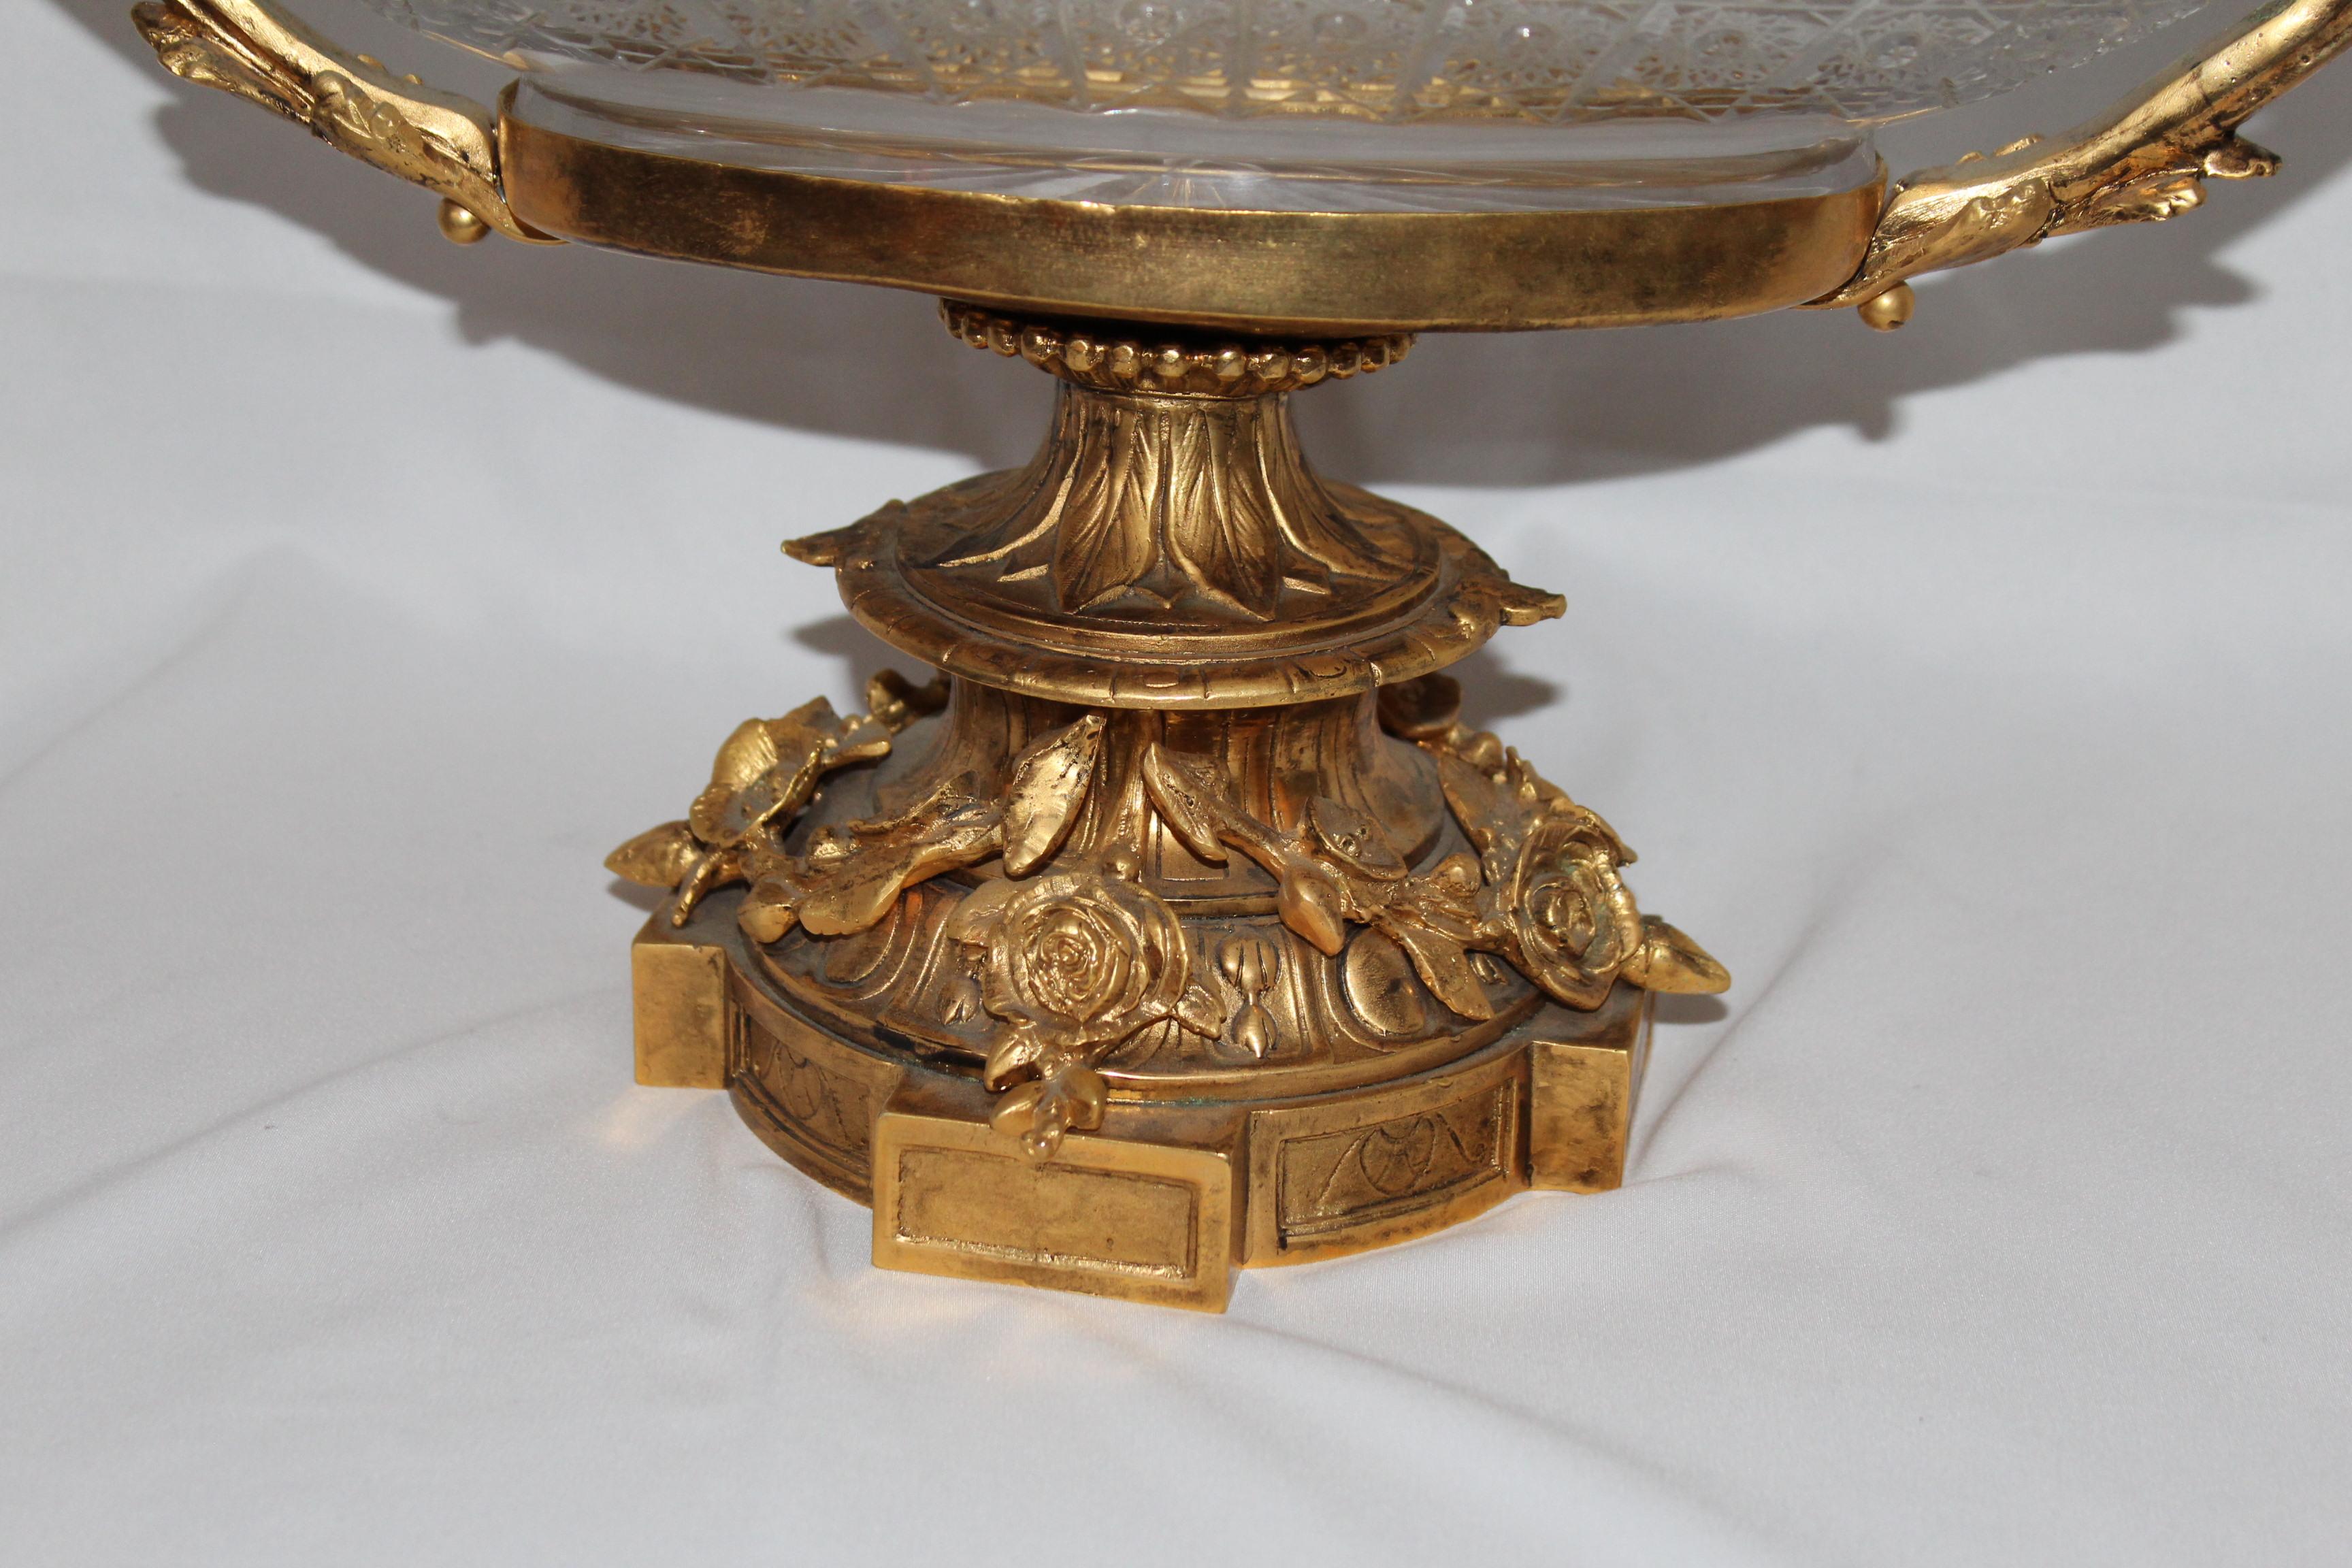 Empire Revival Crystal Bowl, Center Piece, Doré 22-Karat Gold Plate on Bronze Empire Style